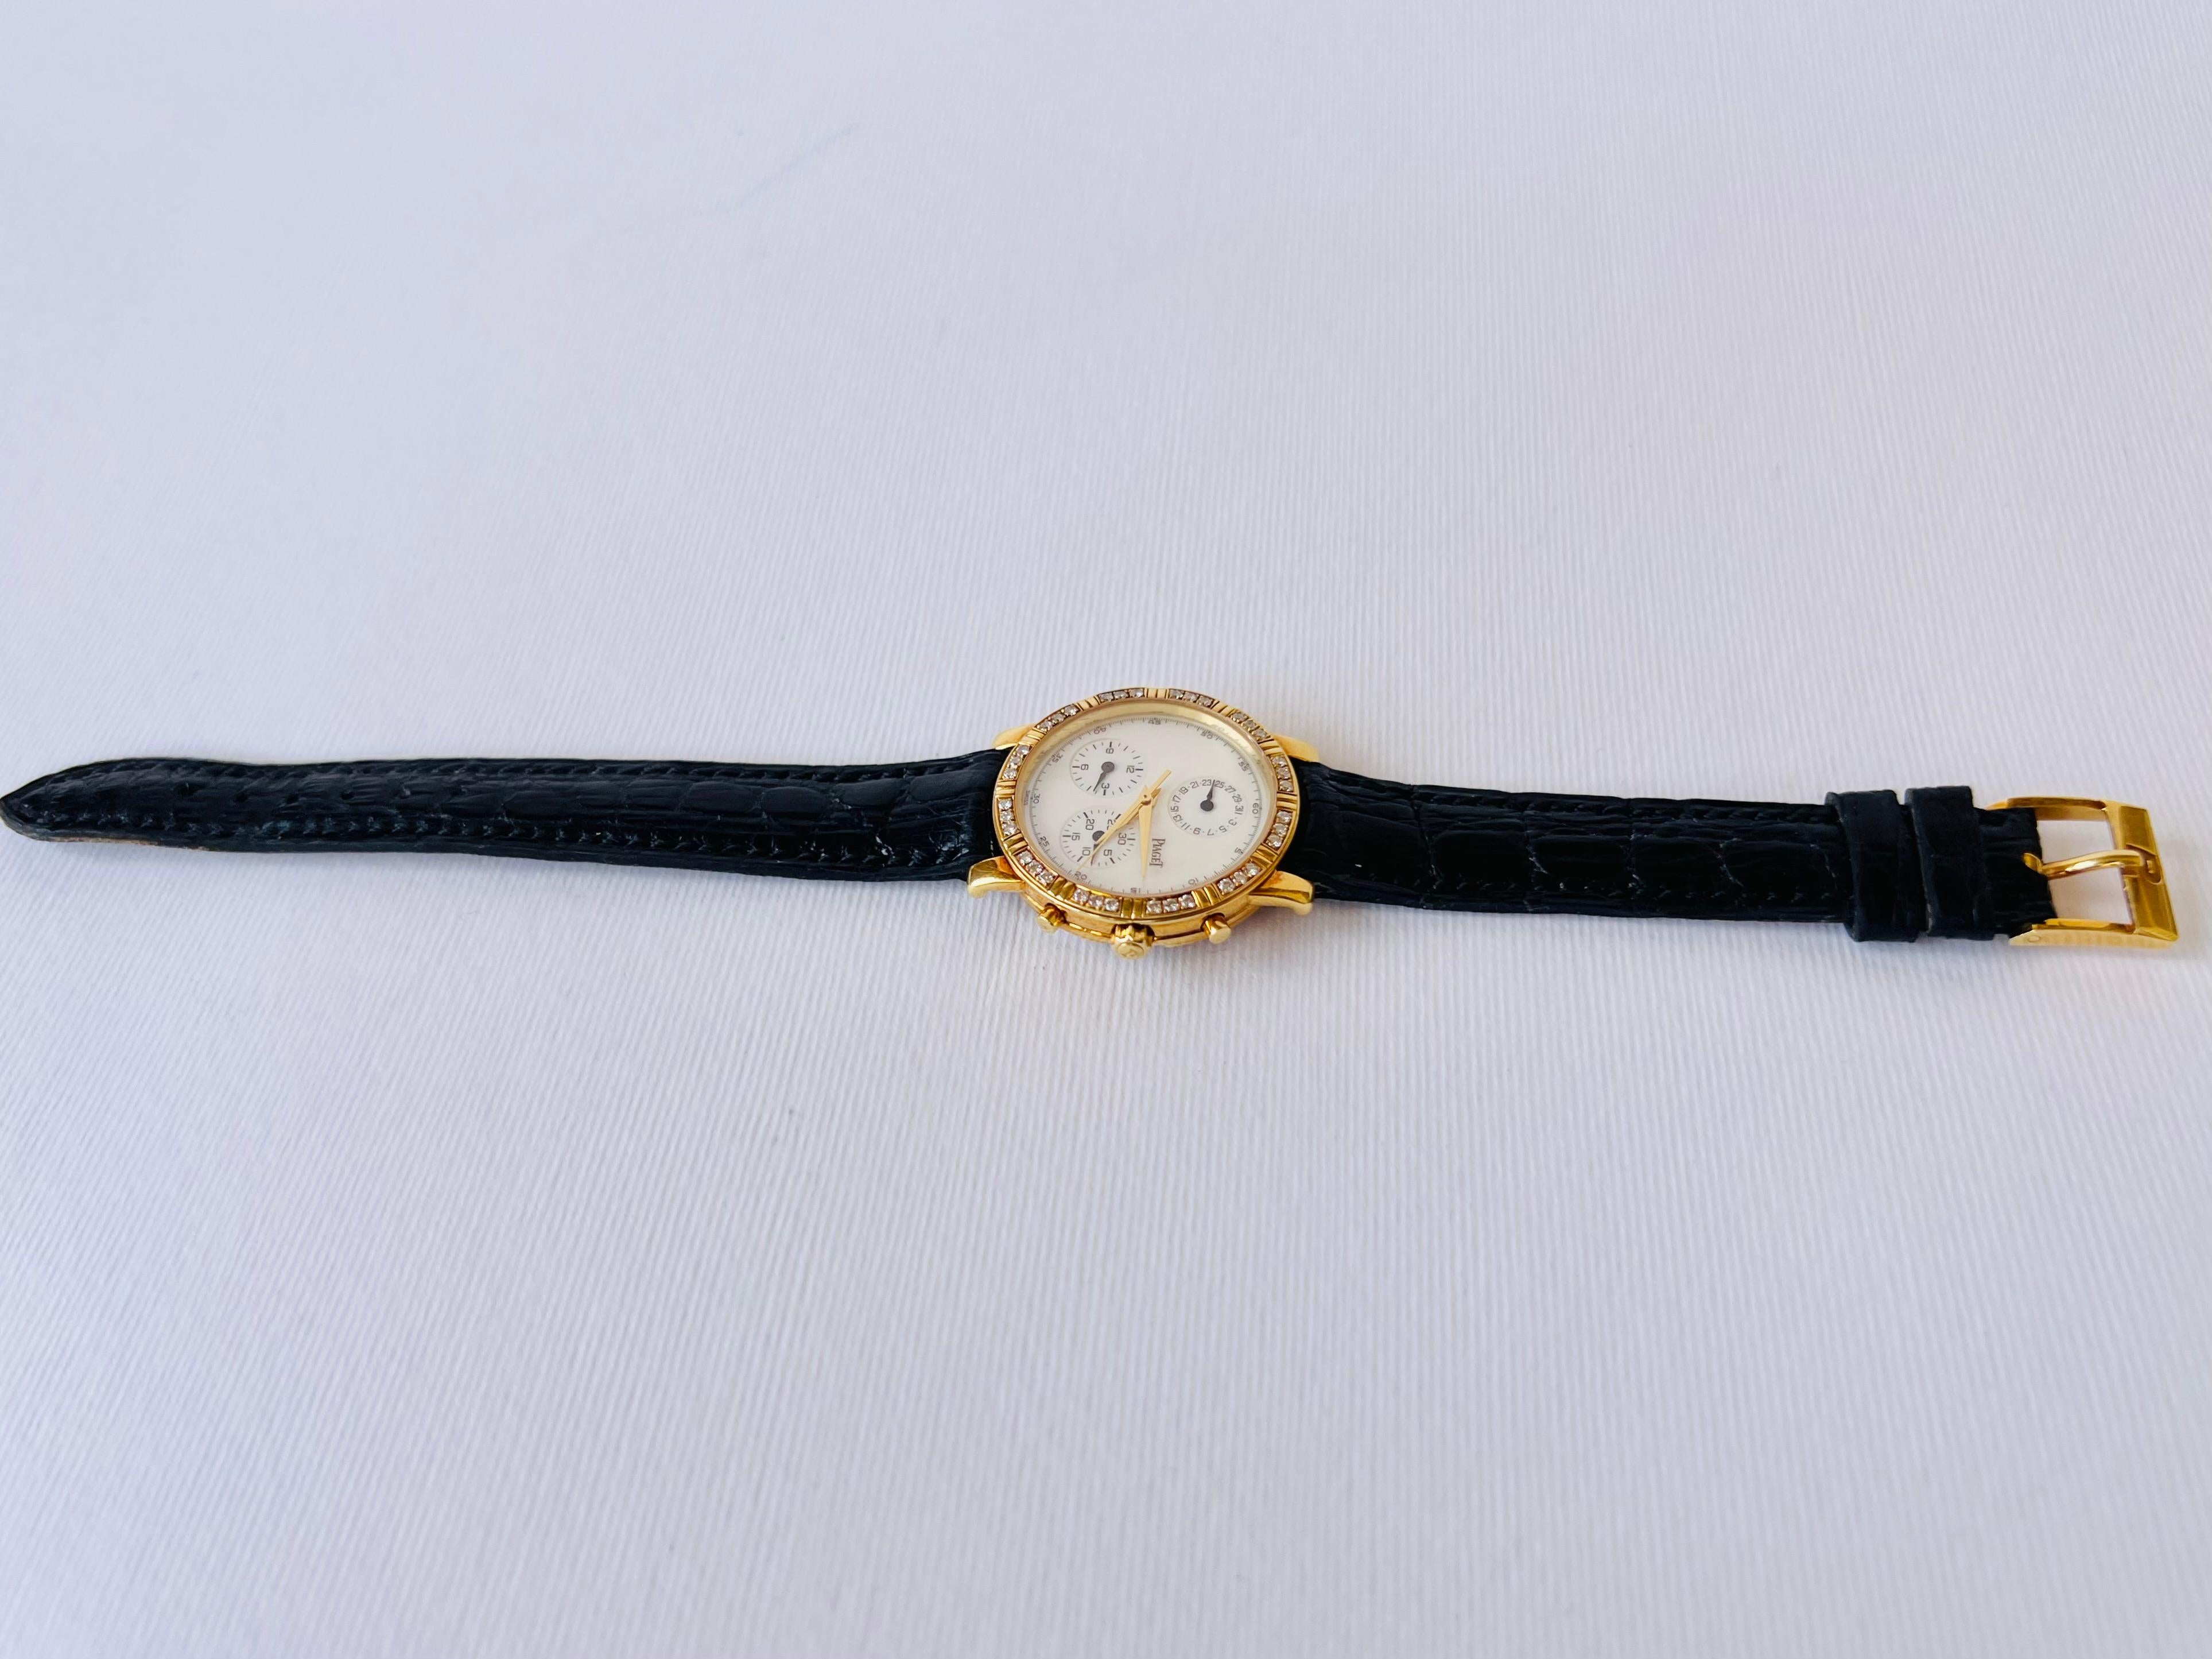 Piaget Haute Complication Chronograph 14013 MOP Dial 18k Gold Diamond Watch For Sale 7